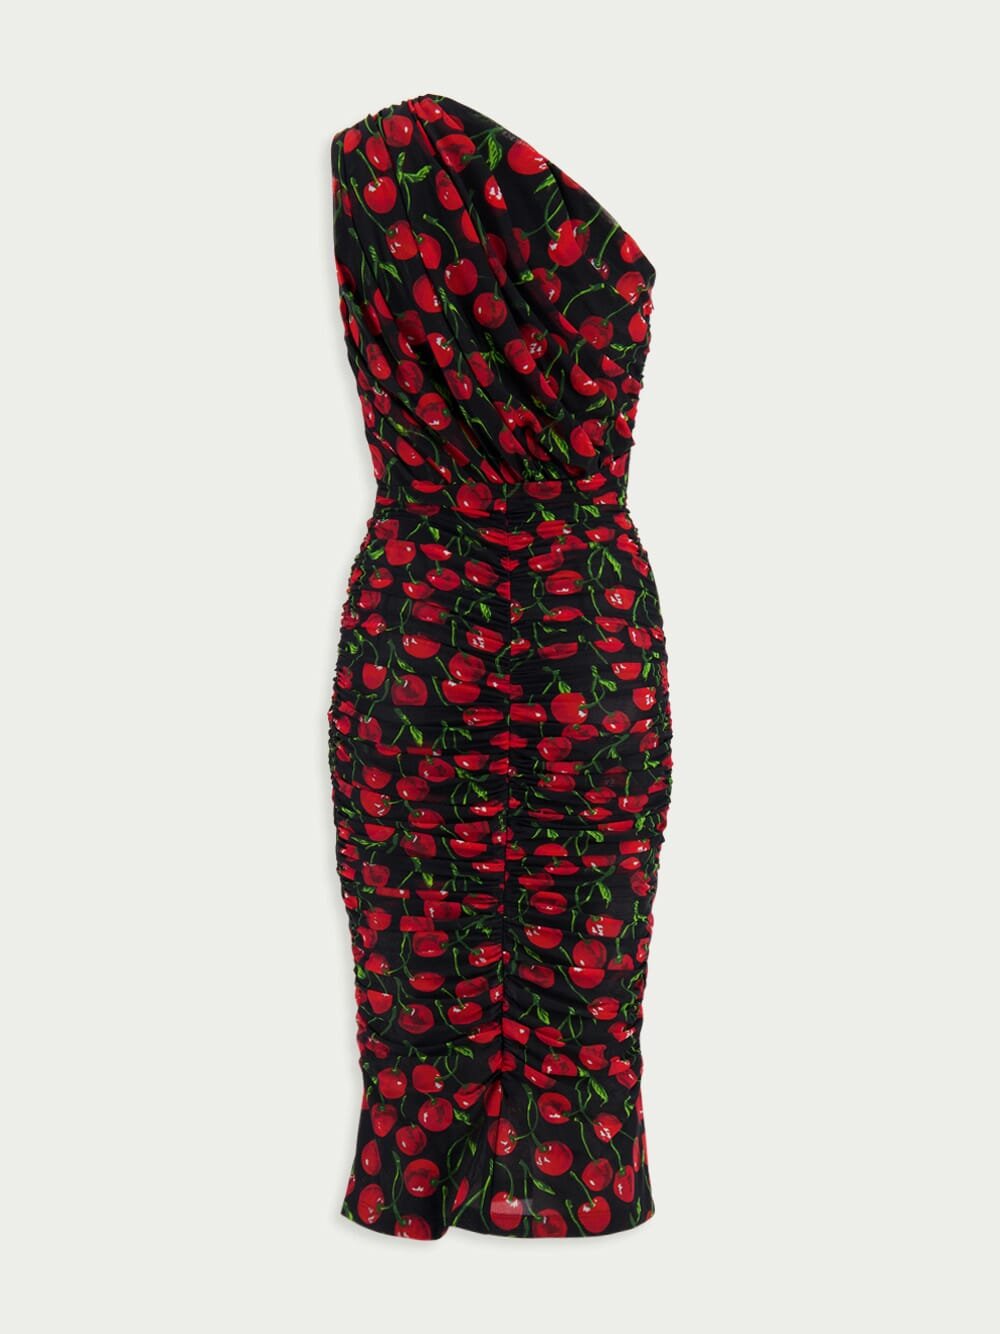 Dolce & GabbanaCherry-Print Ruched Midi Dress at Fashion Clinic